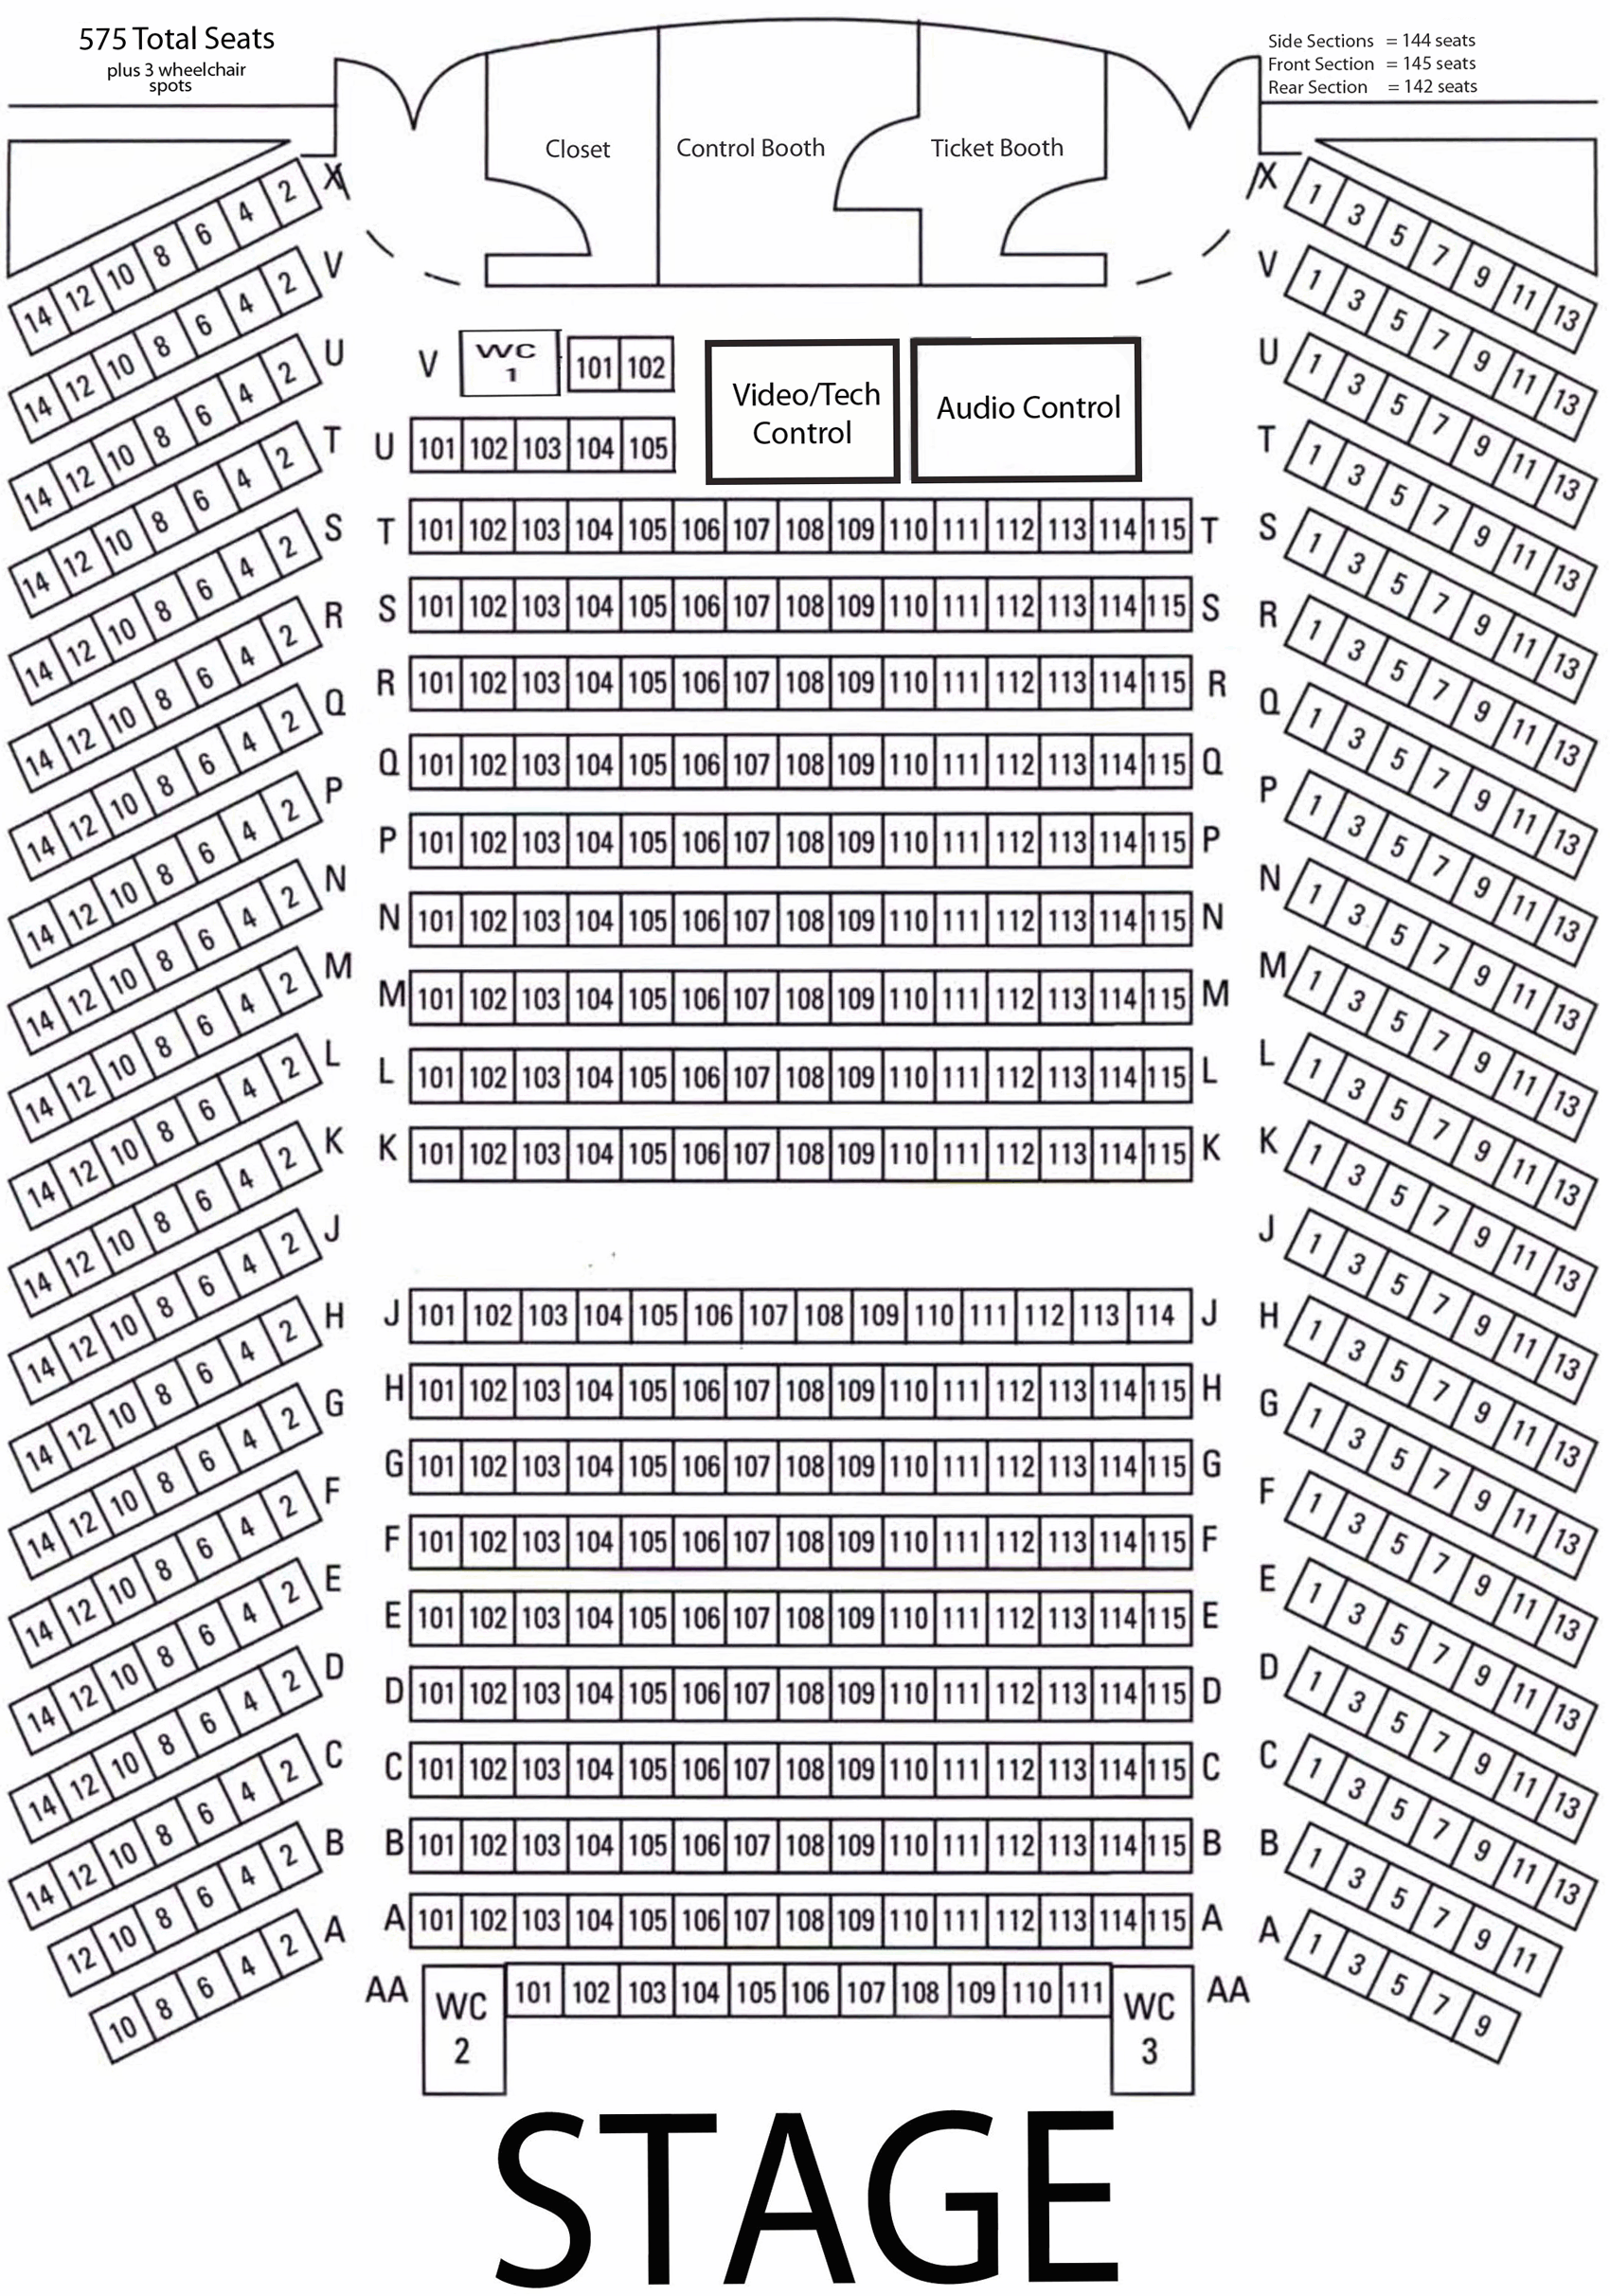 Sugarloaf Pac Seating Chart